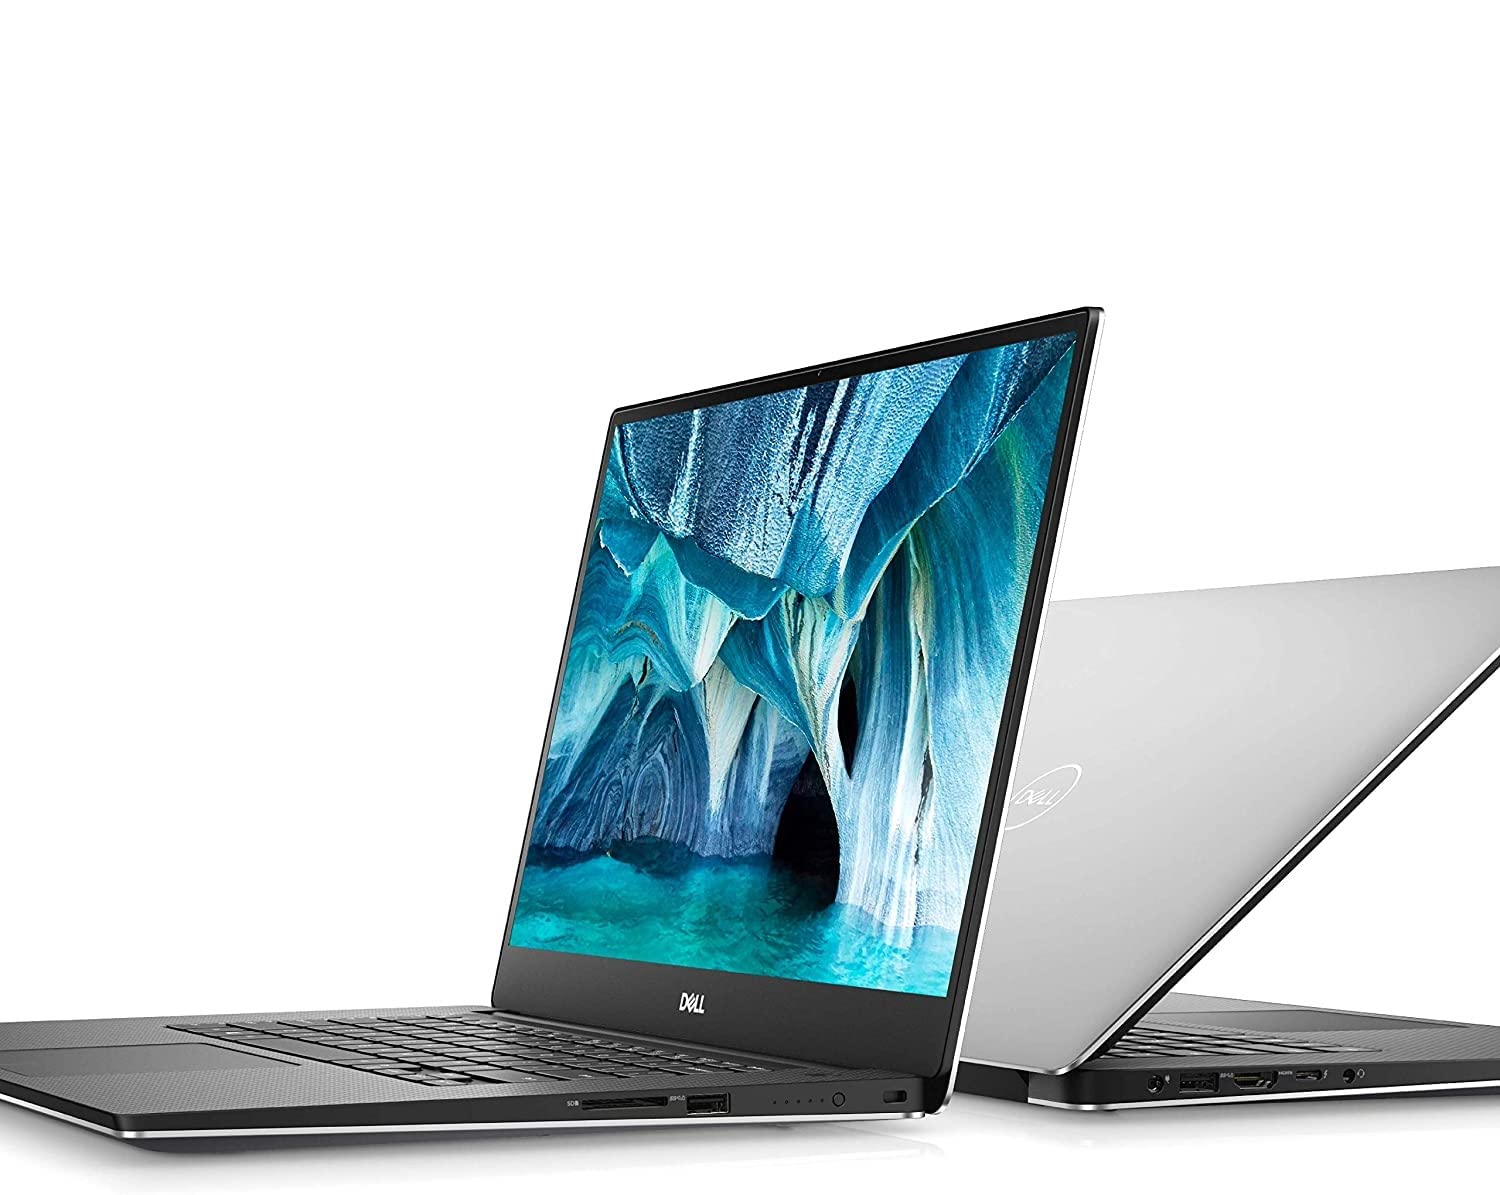 Dell XPS 15 9570 Personal Laptop (Intel i7-8750H 6-Core, 16GB RAM, 512GB SSD, 15.6